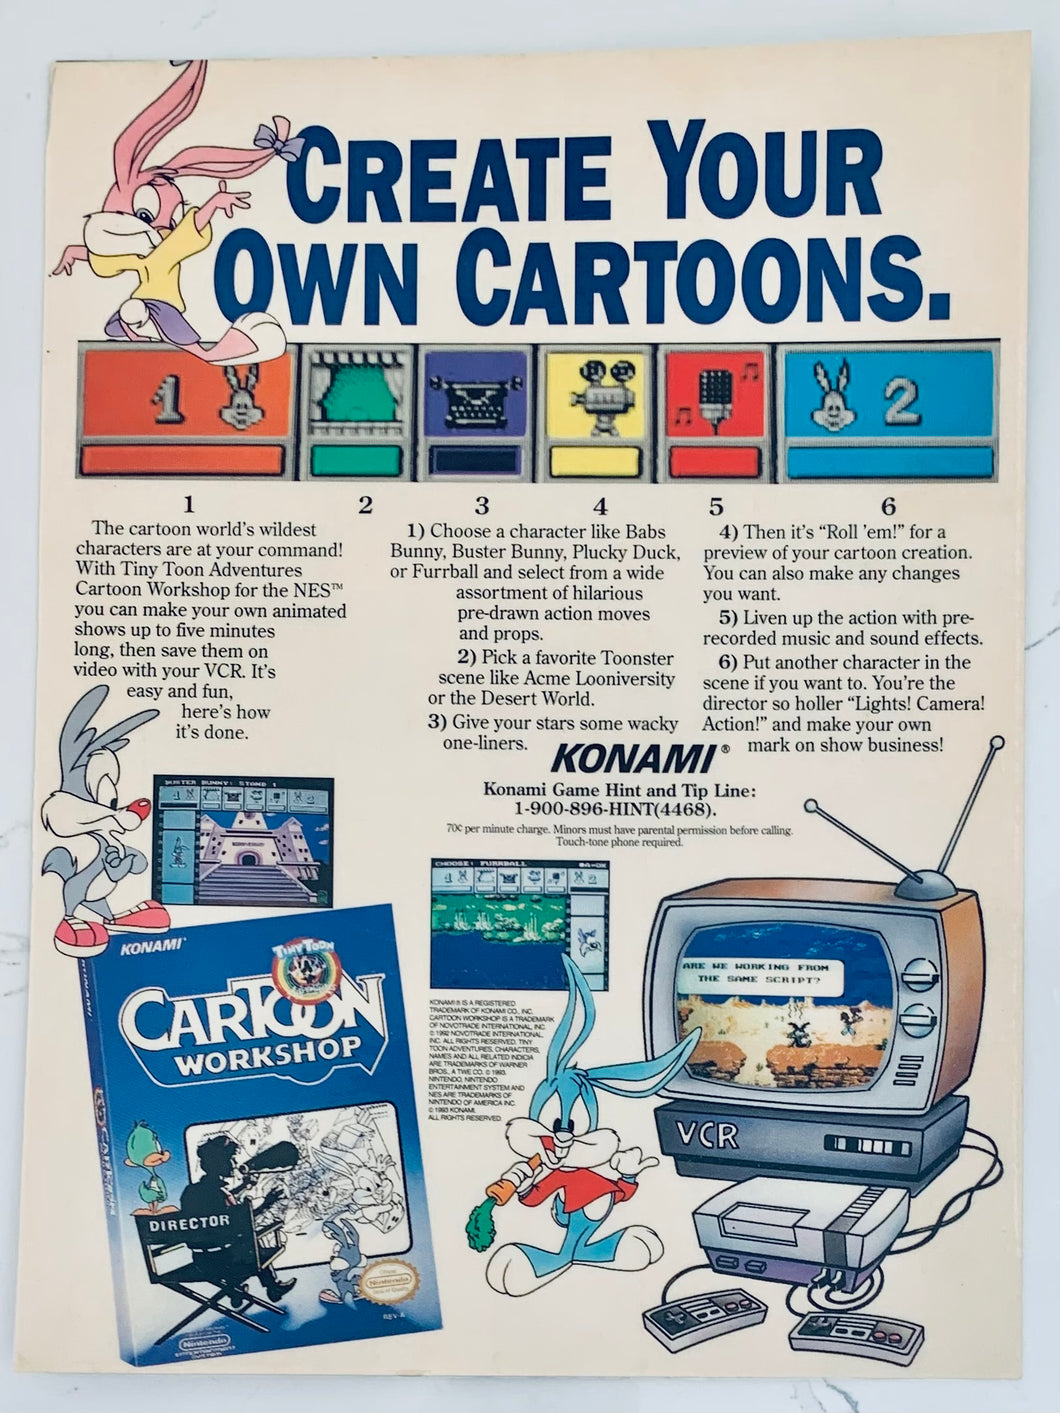 Cartoon Workshop - NES - Original Vintage Advertisement - Print Ads - Laminated A4 Poster